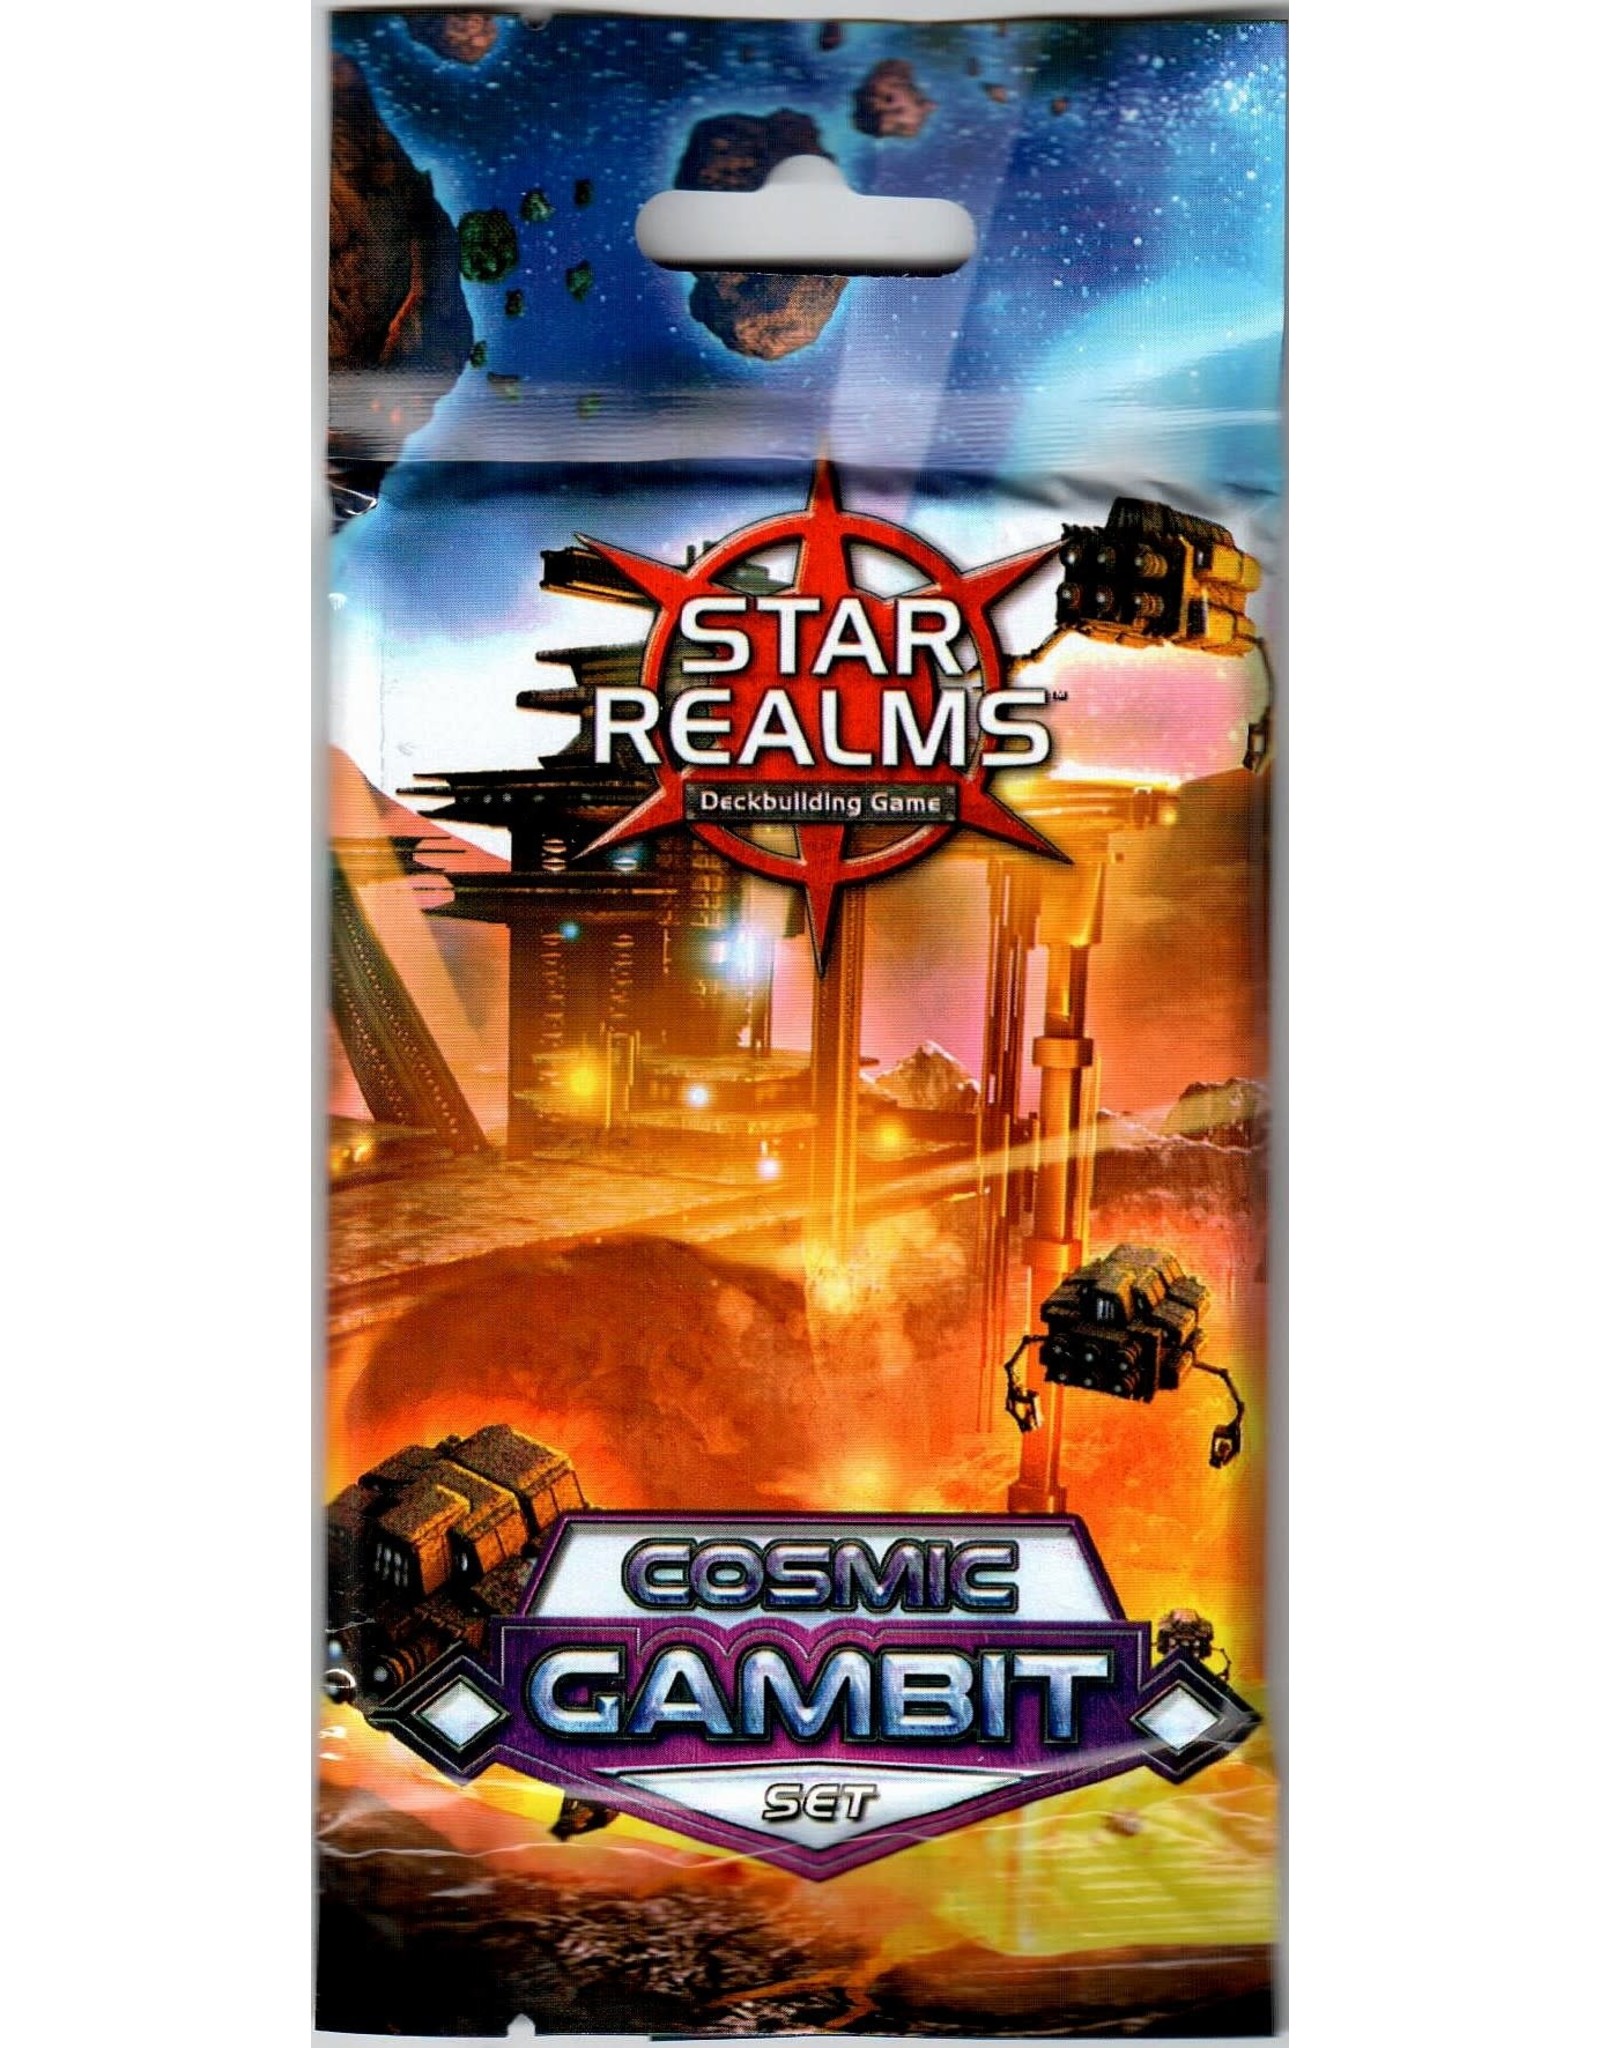 Star Realms Cosmic Gambit set